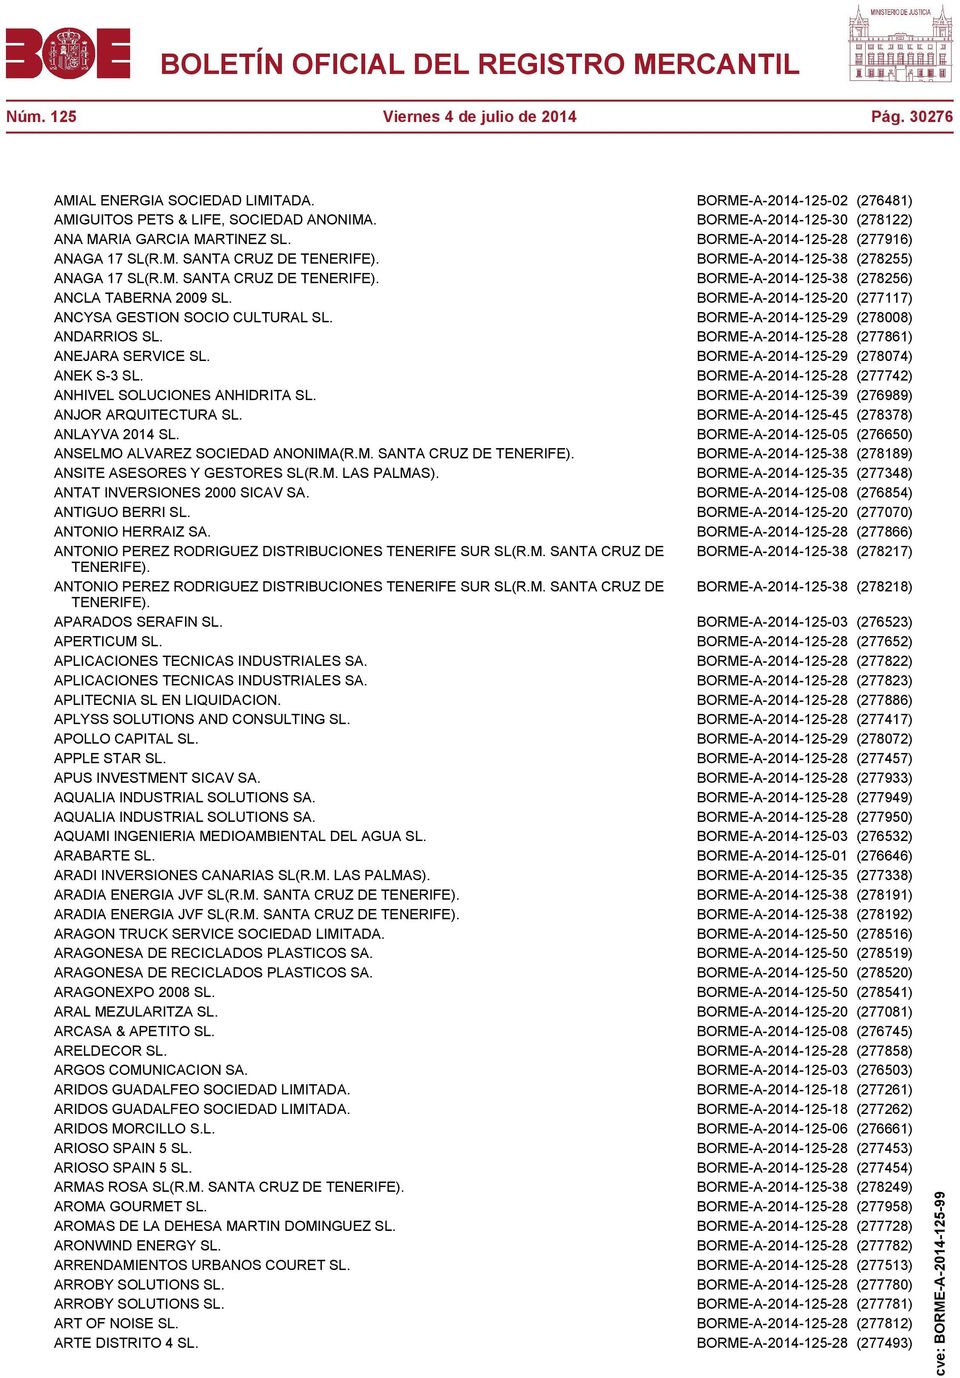 BORME-A-2014-125-20 (277117) ANCYSA GESTION SOCIO CULTURAL SL. BORME-A-2014-125-29 (278008) ANDARRIOS SL. BORME-A-2014-125-28 (277861) ANEJARA SERVICE SL. BORME-A-2014-125-29 (278074) ANEK S-3 SL.